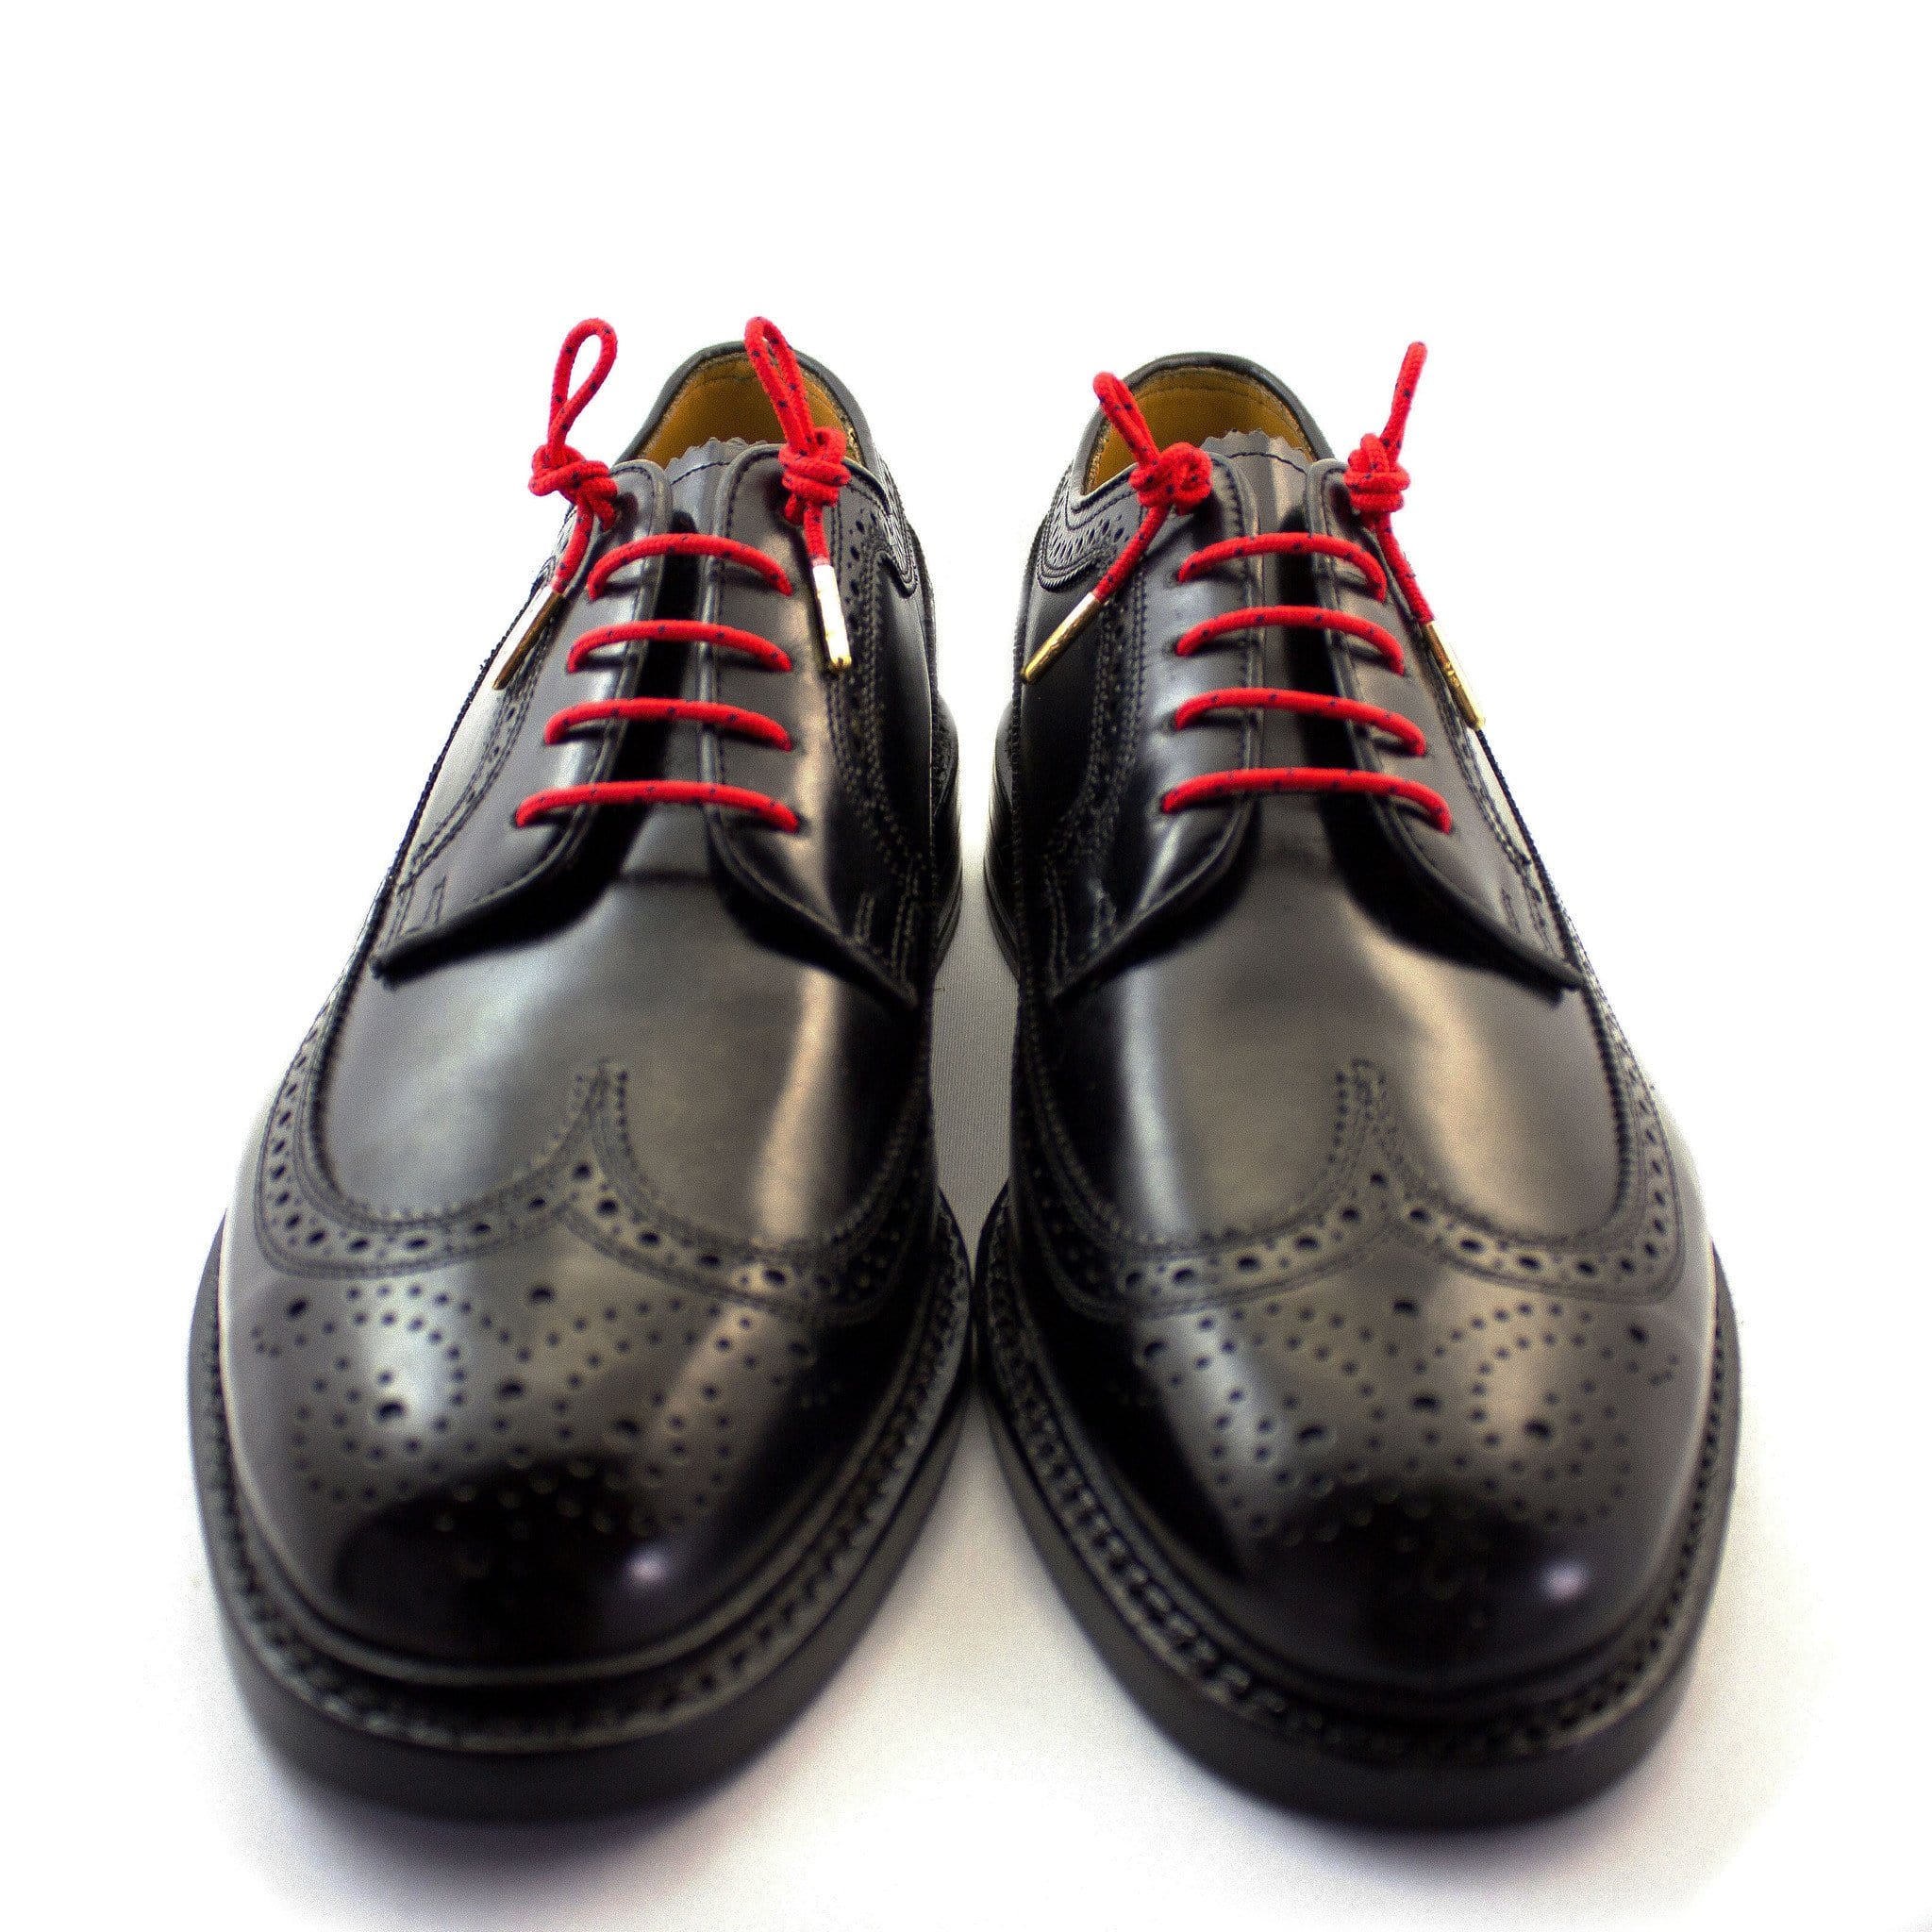 red dress shoe laces